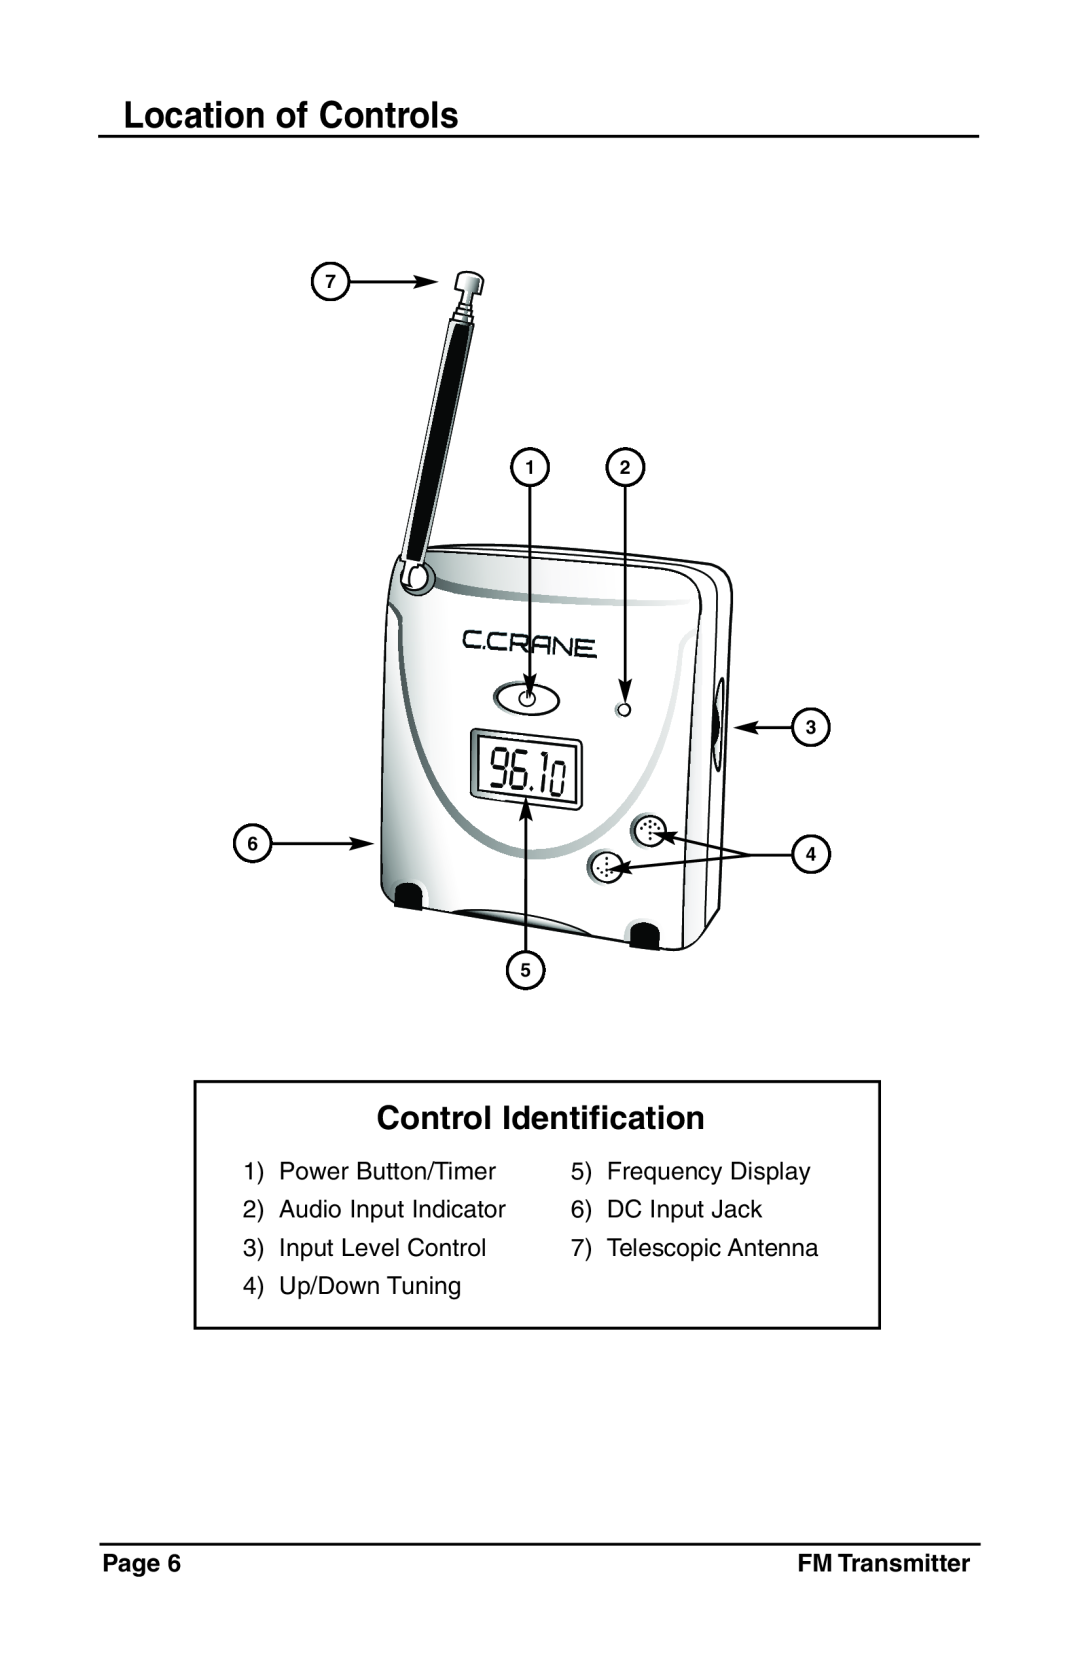 C. Crane Satellite Radio manual Location of Controls, Control Identification, Page 